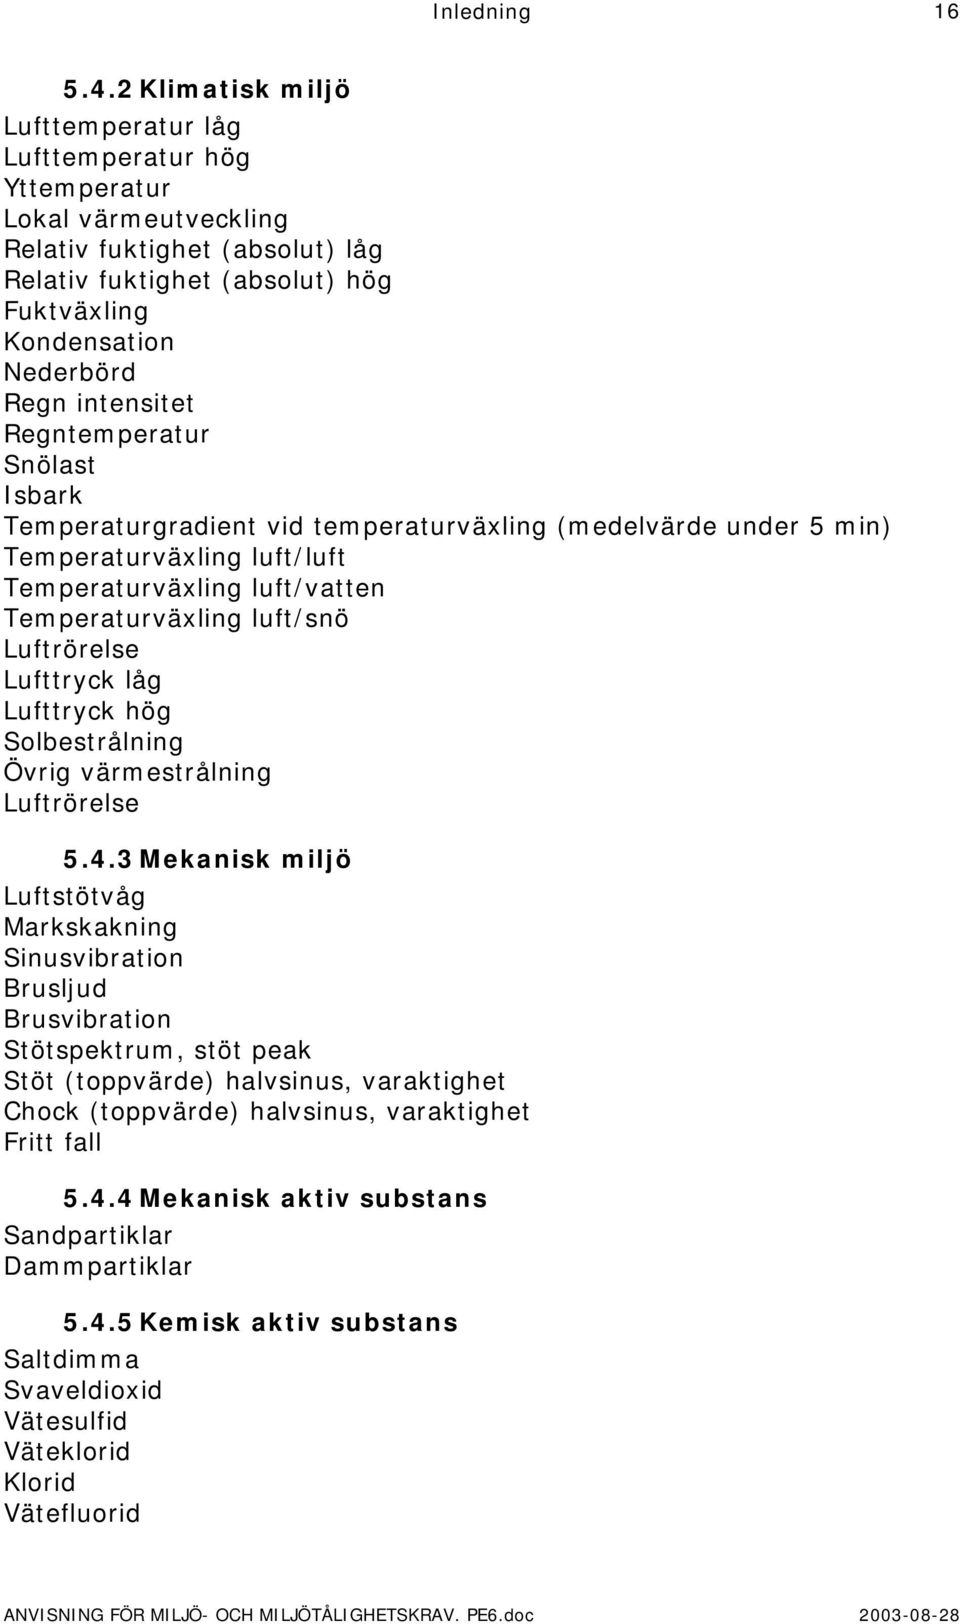 intensitet Regntemperatur Snölast Isbark Temperaturgradient vid temperaturväxling (medelvärde under 5 min) Temperaturväxling luft/luft Temperaturväxling luft/vatten Temperaturväxling luft/snö